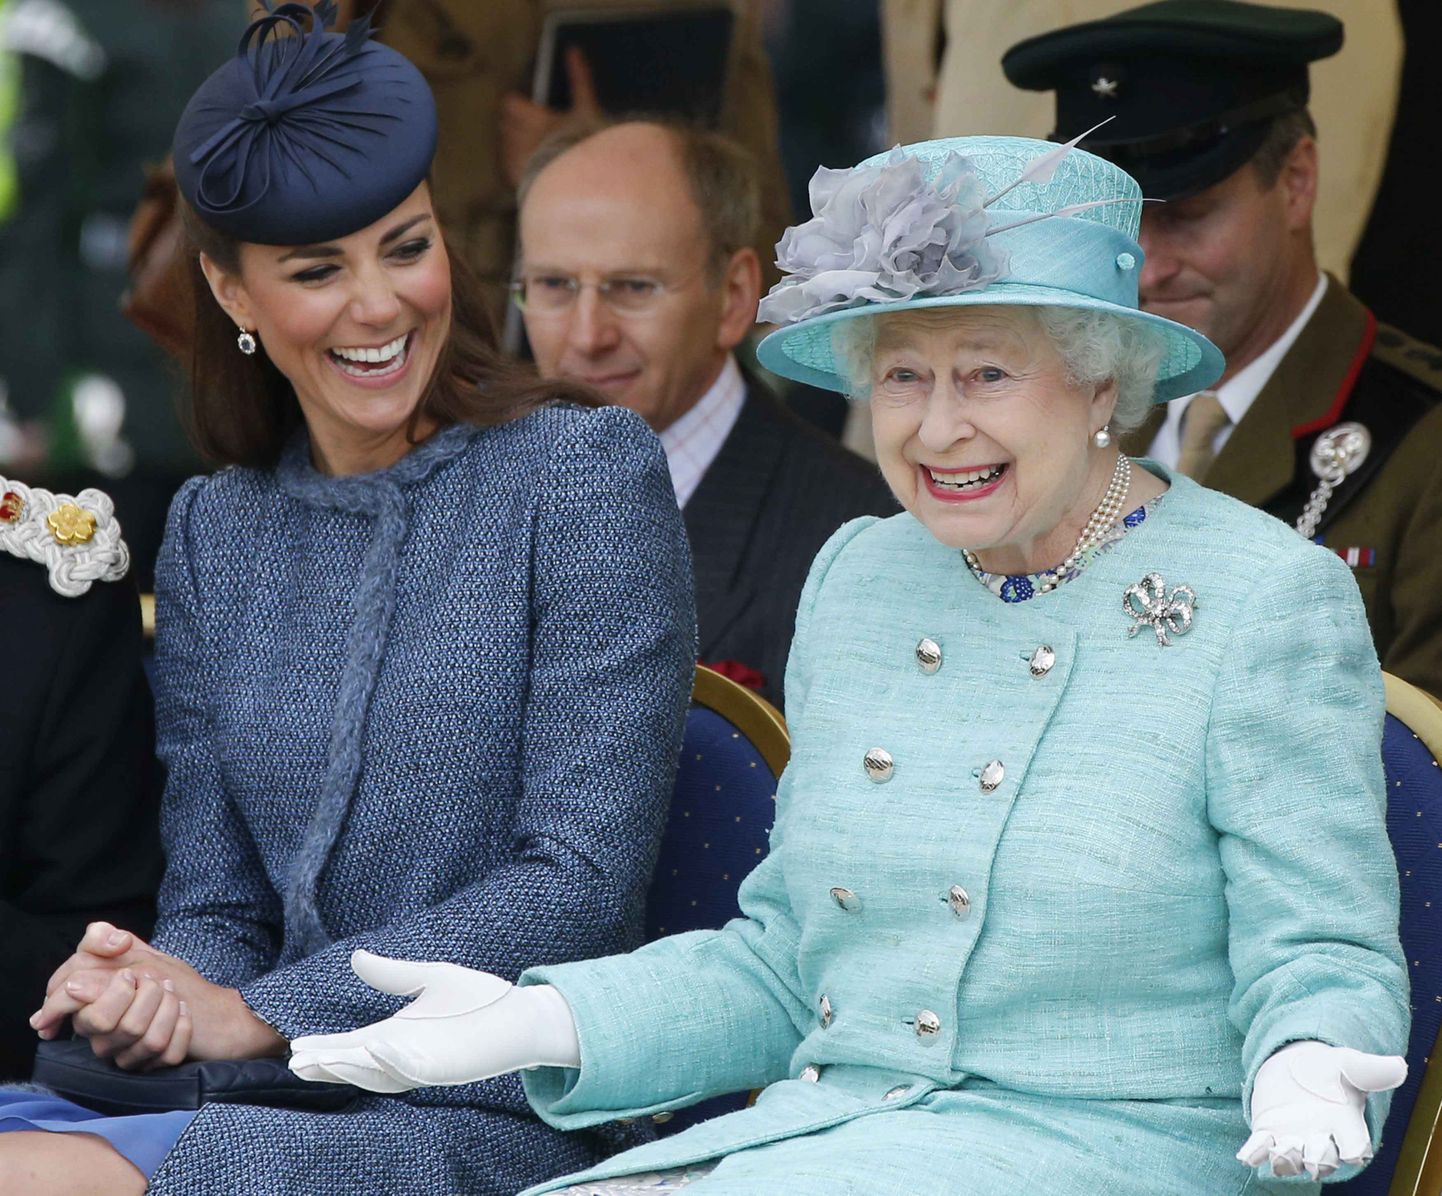 Cambridge'i hertsoginna Kate Middleton ja kuninganna Elizabethh II 2012. aastal.